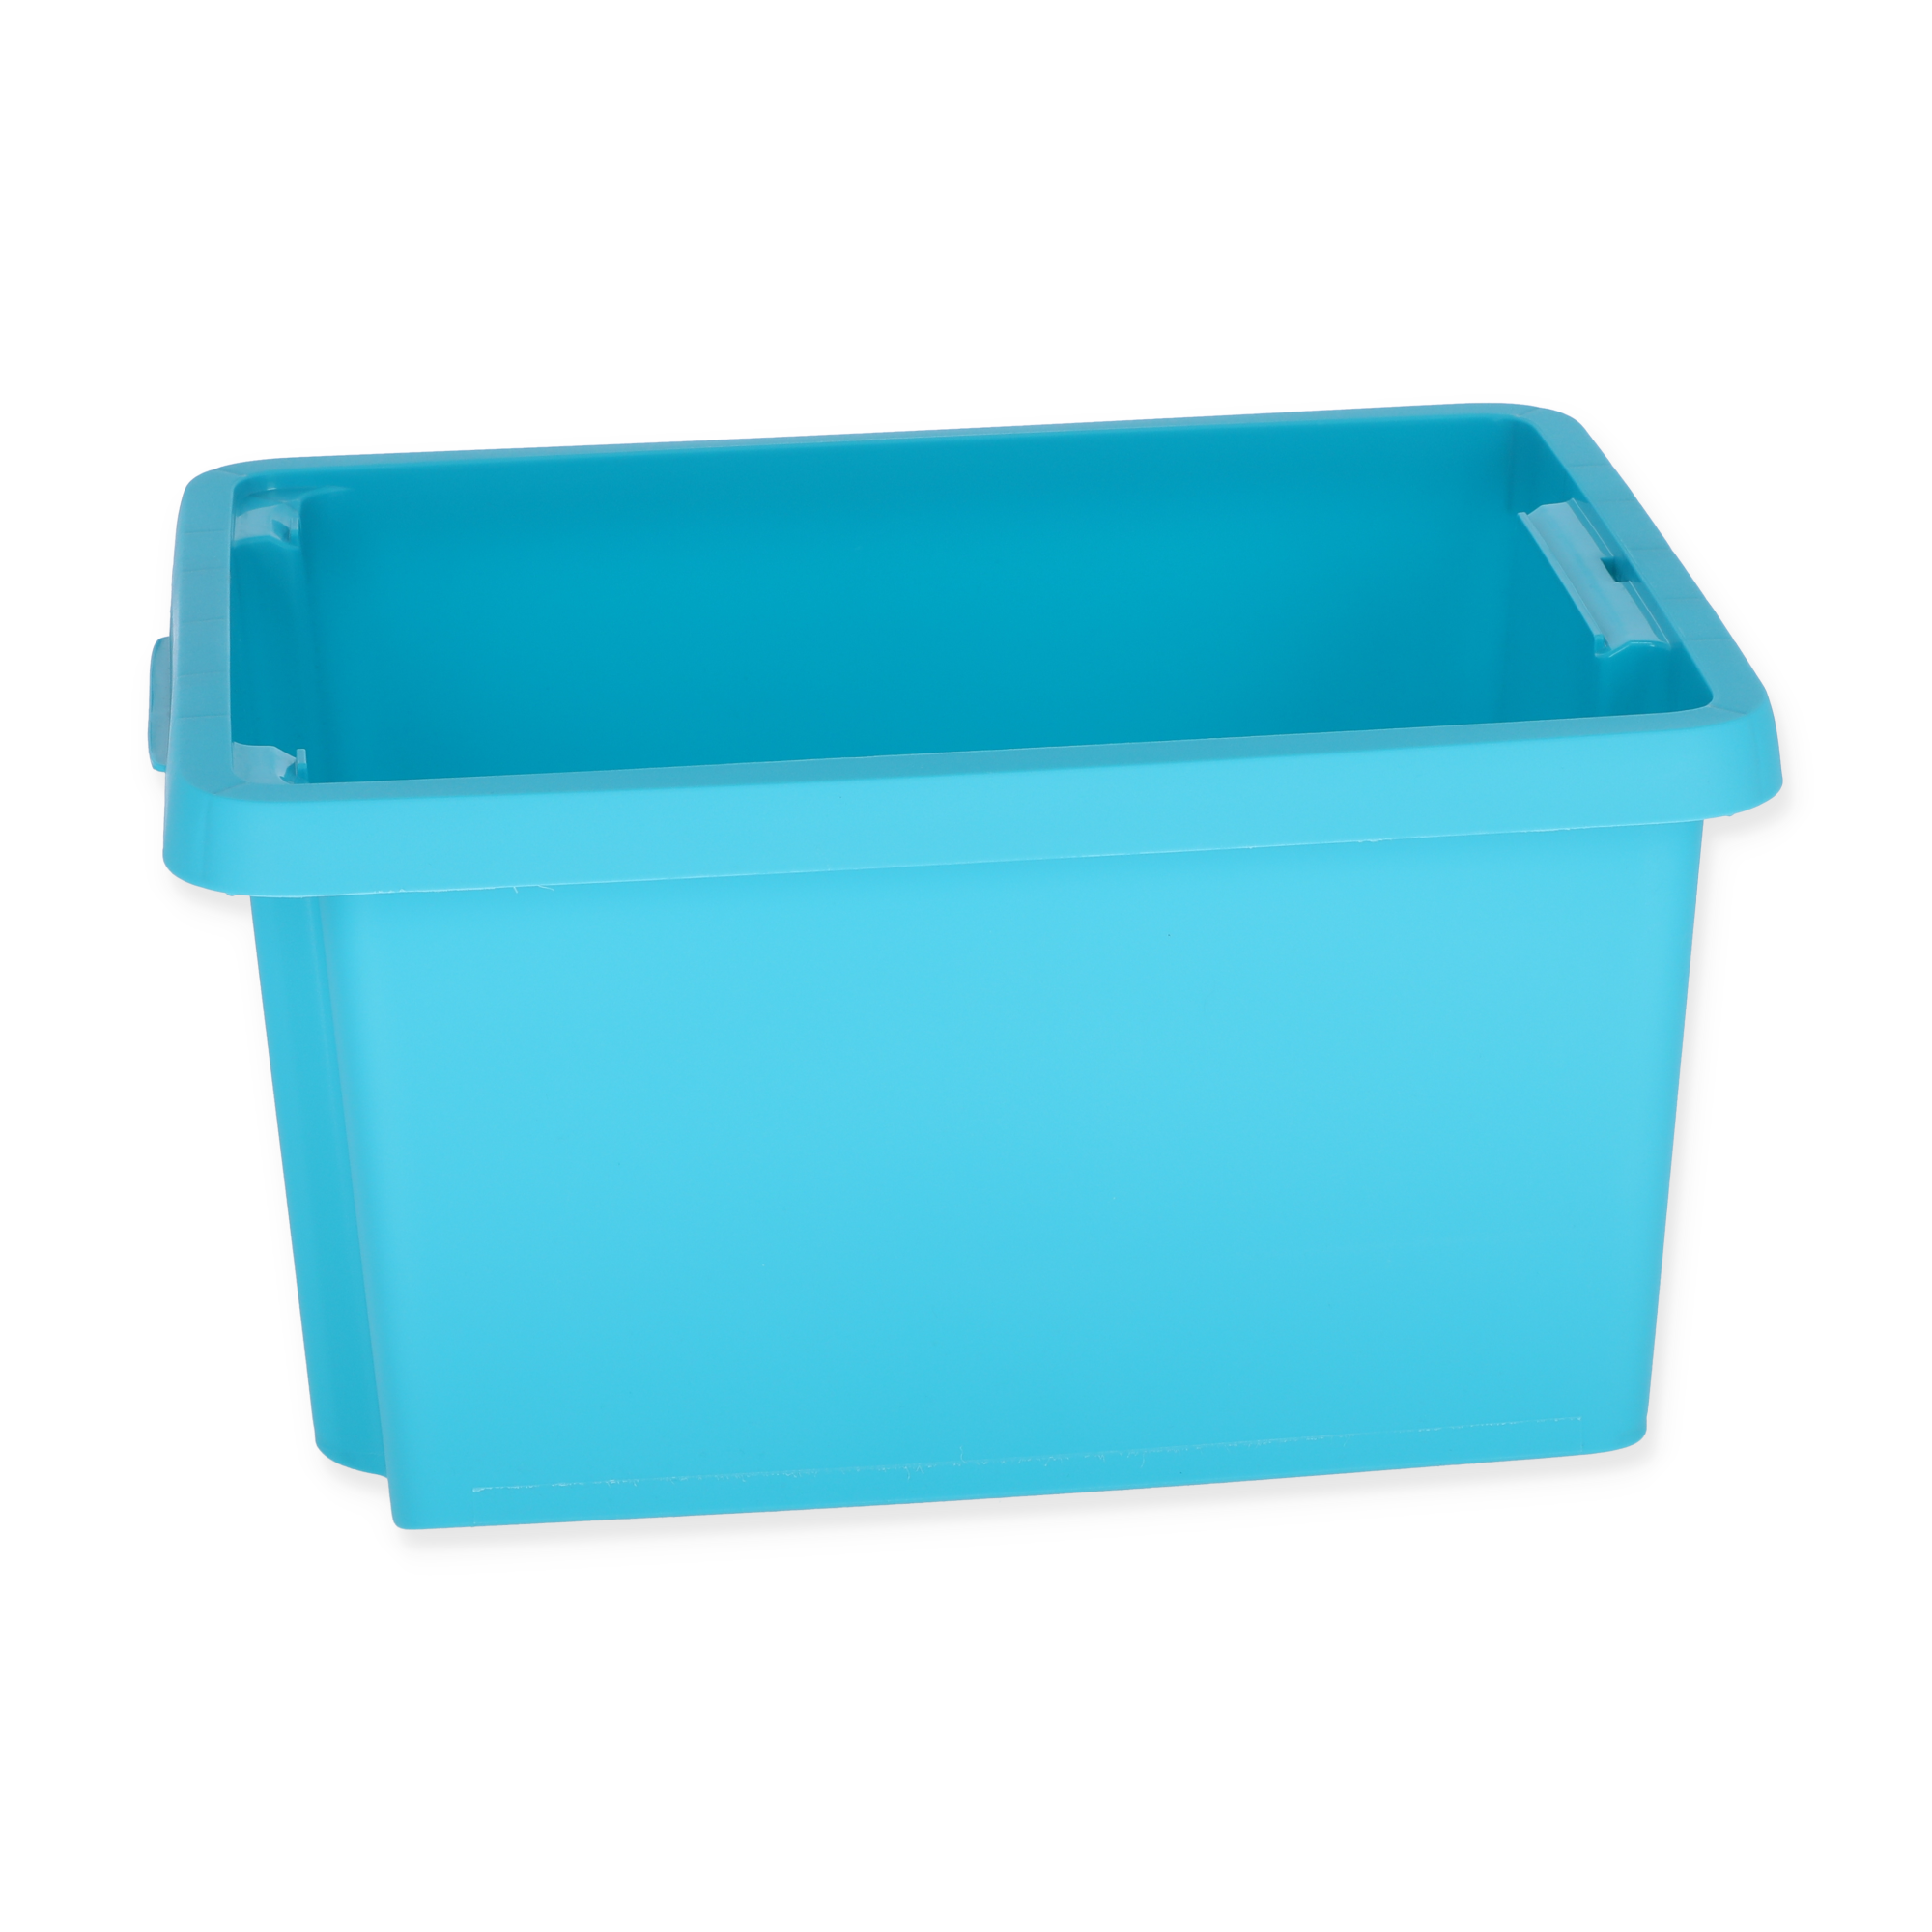 Drehstapelbox 'Essentials' blau 29,5 x 20,3 x 39 cm 16 l + product picture